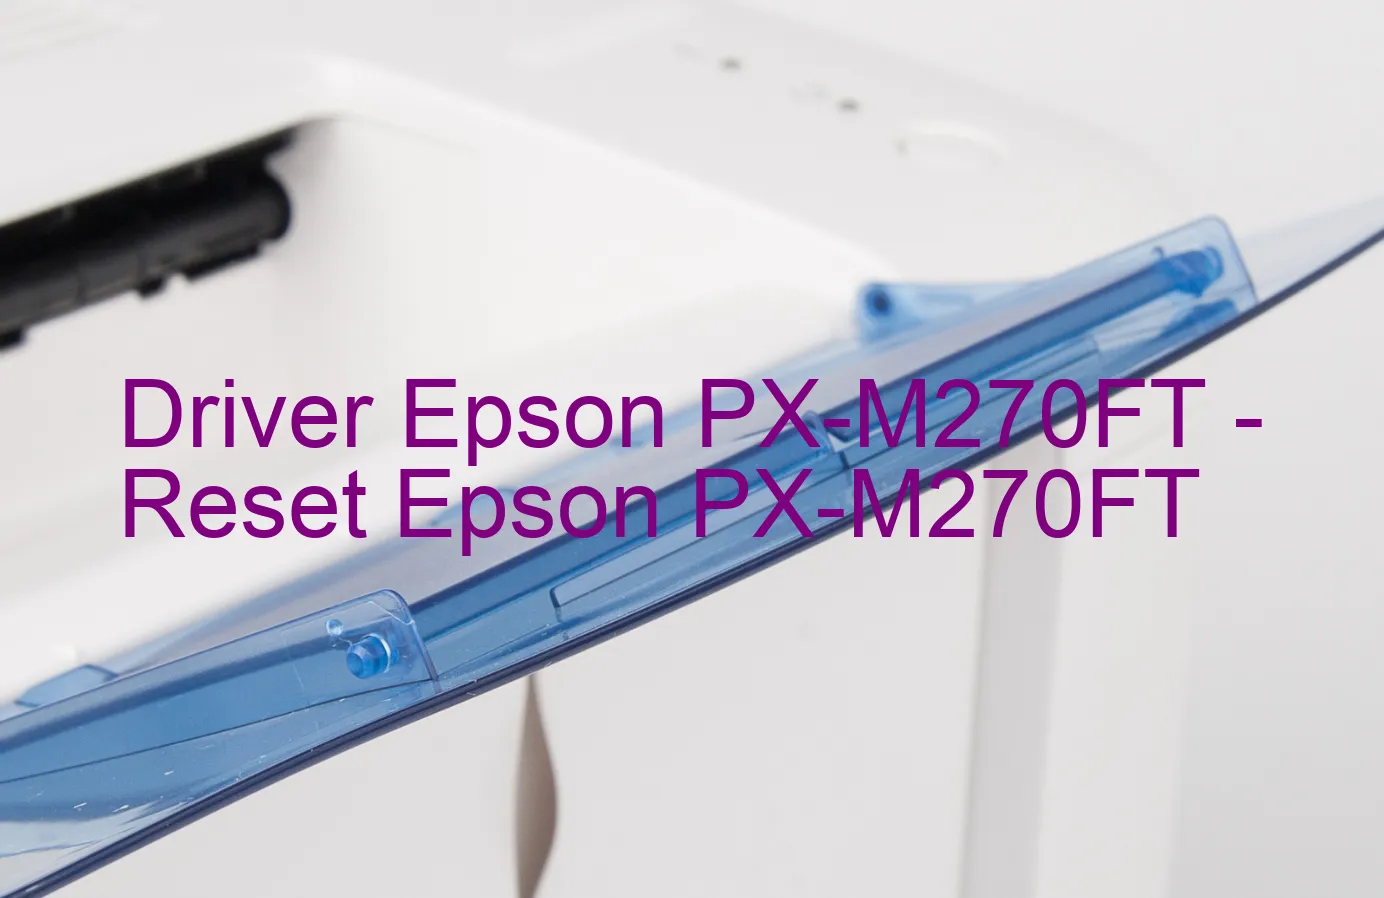 Epson PX-M270FTのドライバー、Epson PX-M270FTのリセットソフトウェア